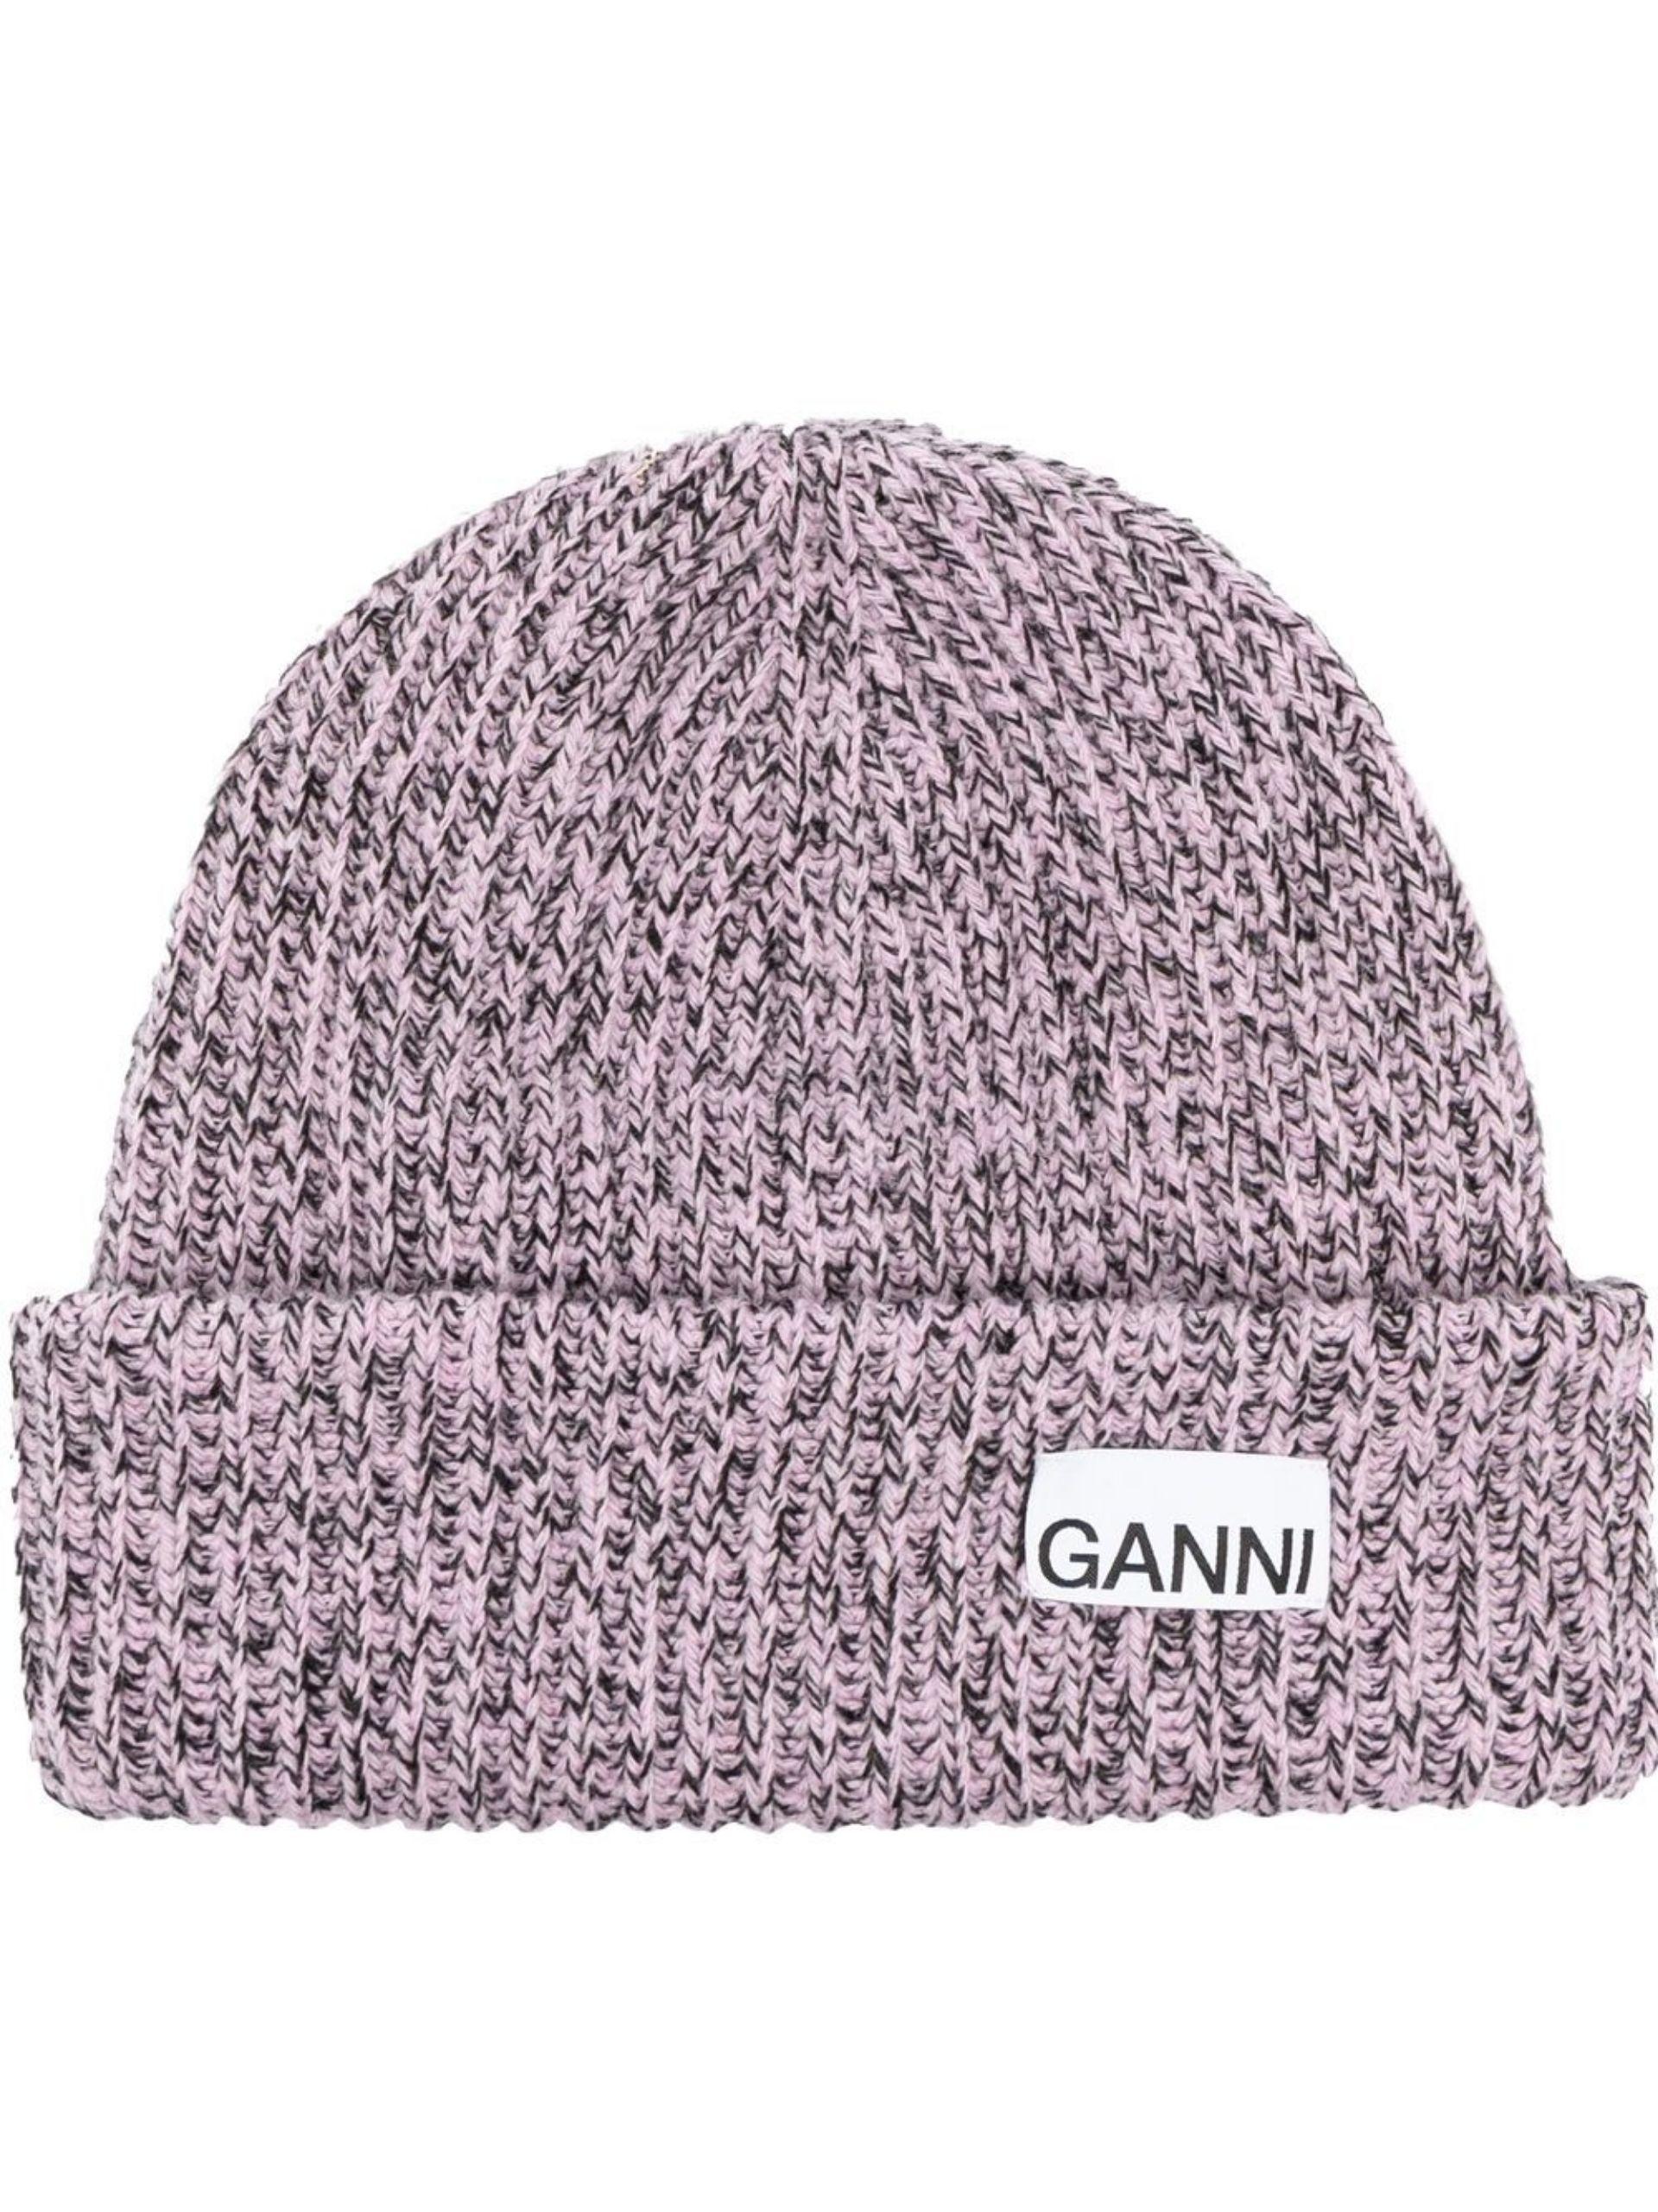 Ganni Logo Patch Knit Beanie in Purple | Lyst